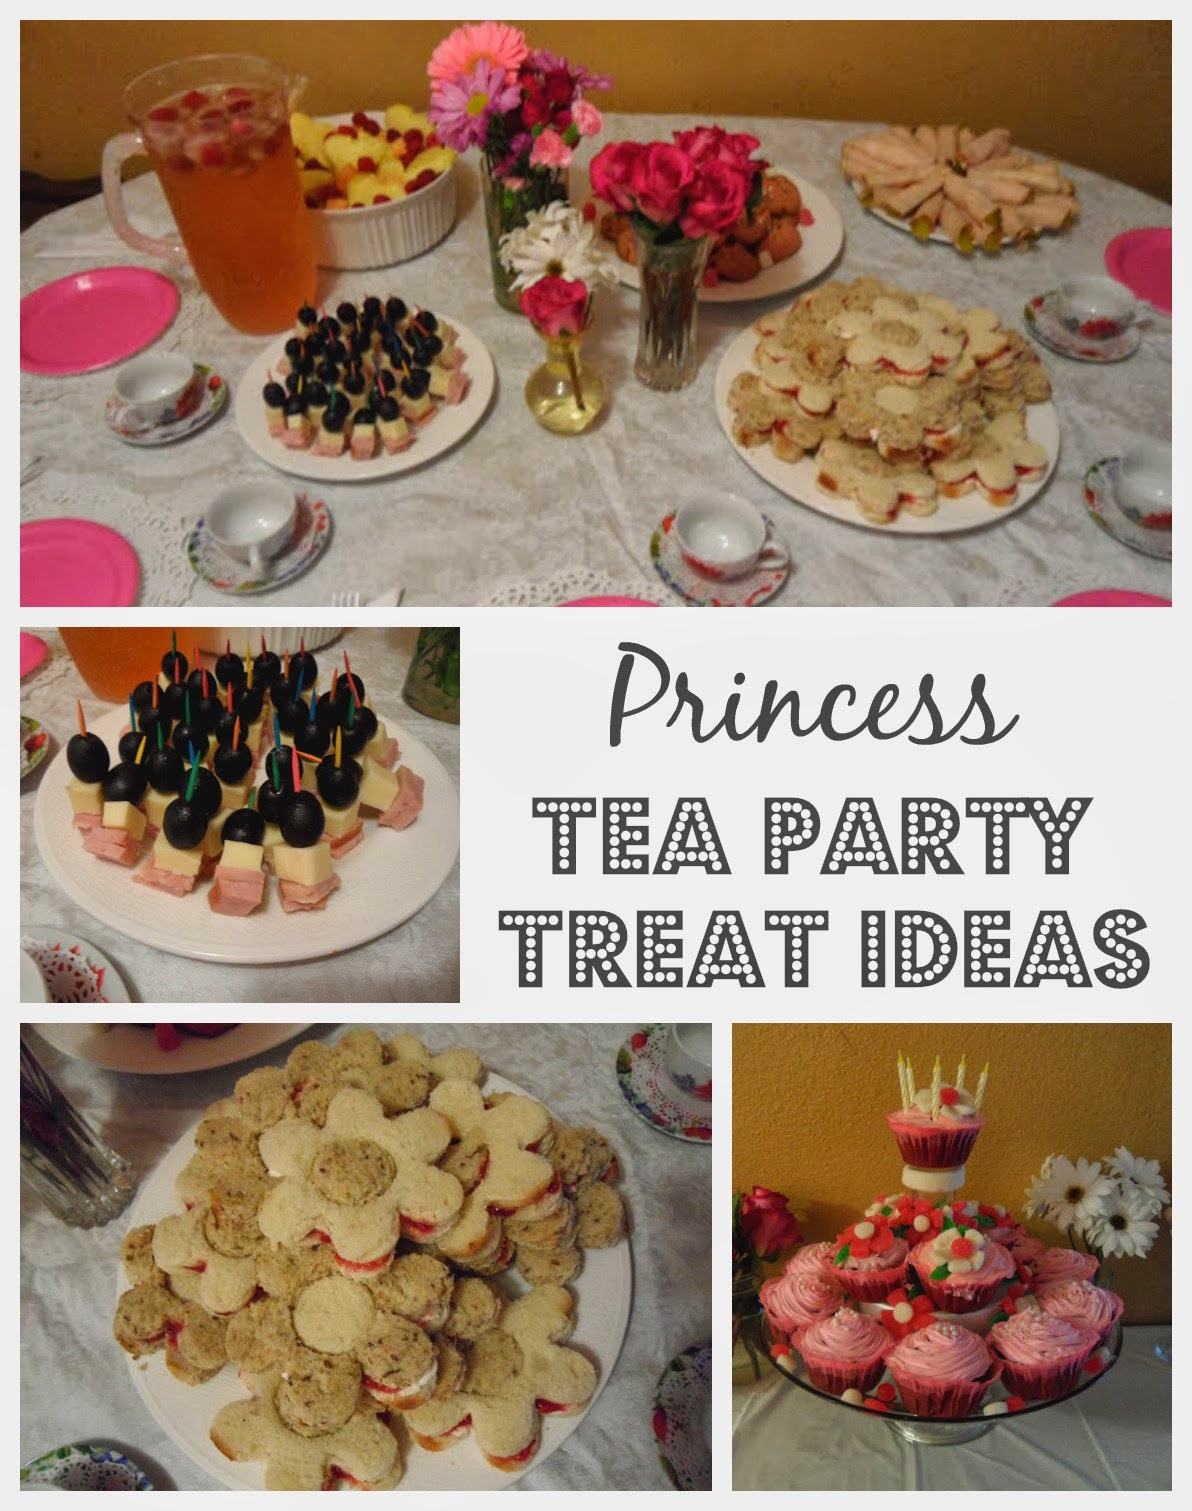 Princess Birthday Party Food Ideas
 Melissa Kaylene Princess Tea Party Birthday Ideas